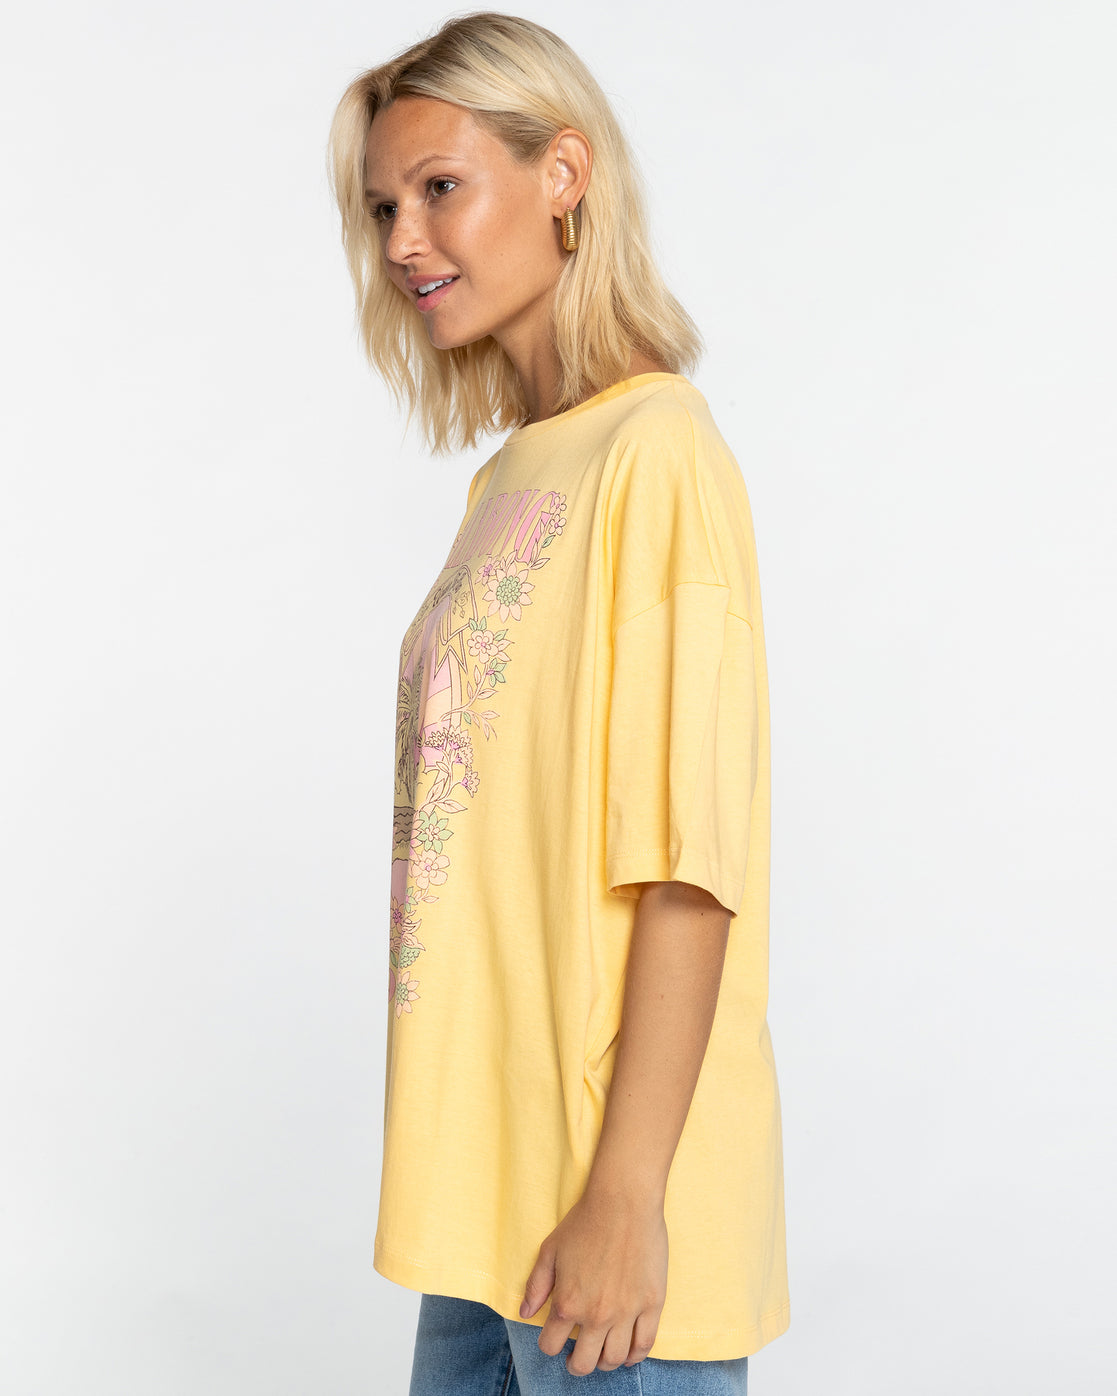 Billabong Under The Sun Camiseta Mujer